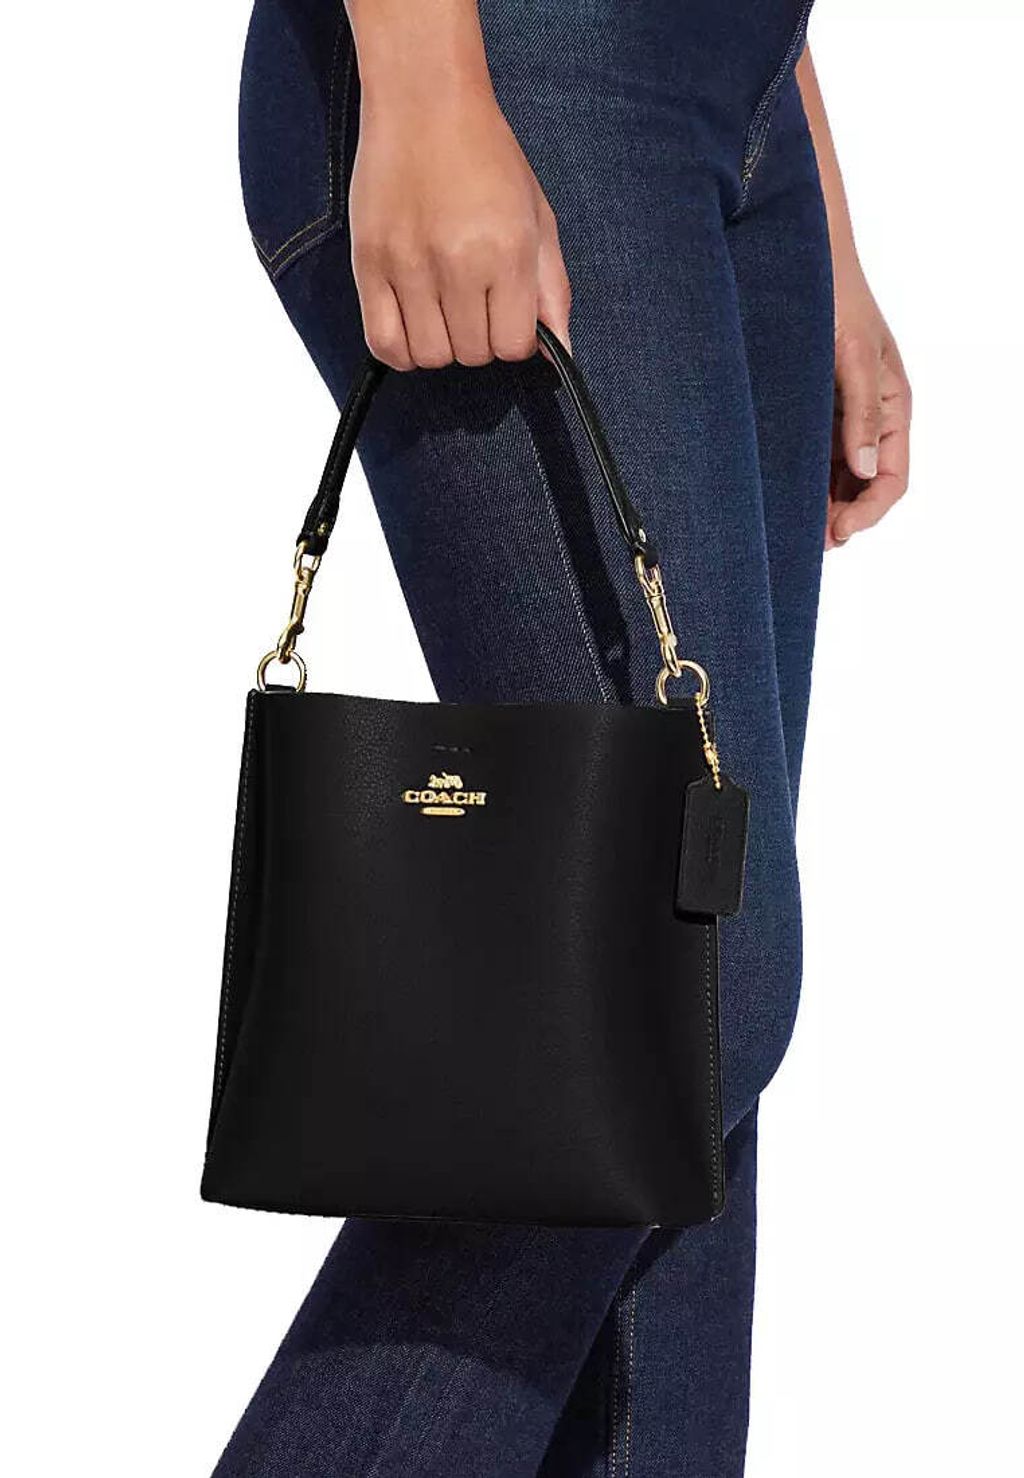 handbagbranded.com getlush outlet personalshopper usa malaysia ready stock Coach malaysia COACH MOLLIE BUCKET BAG 4